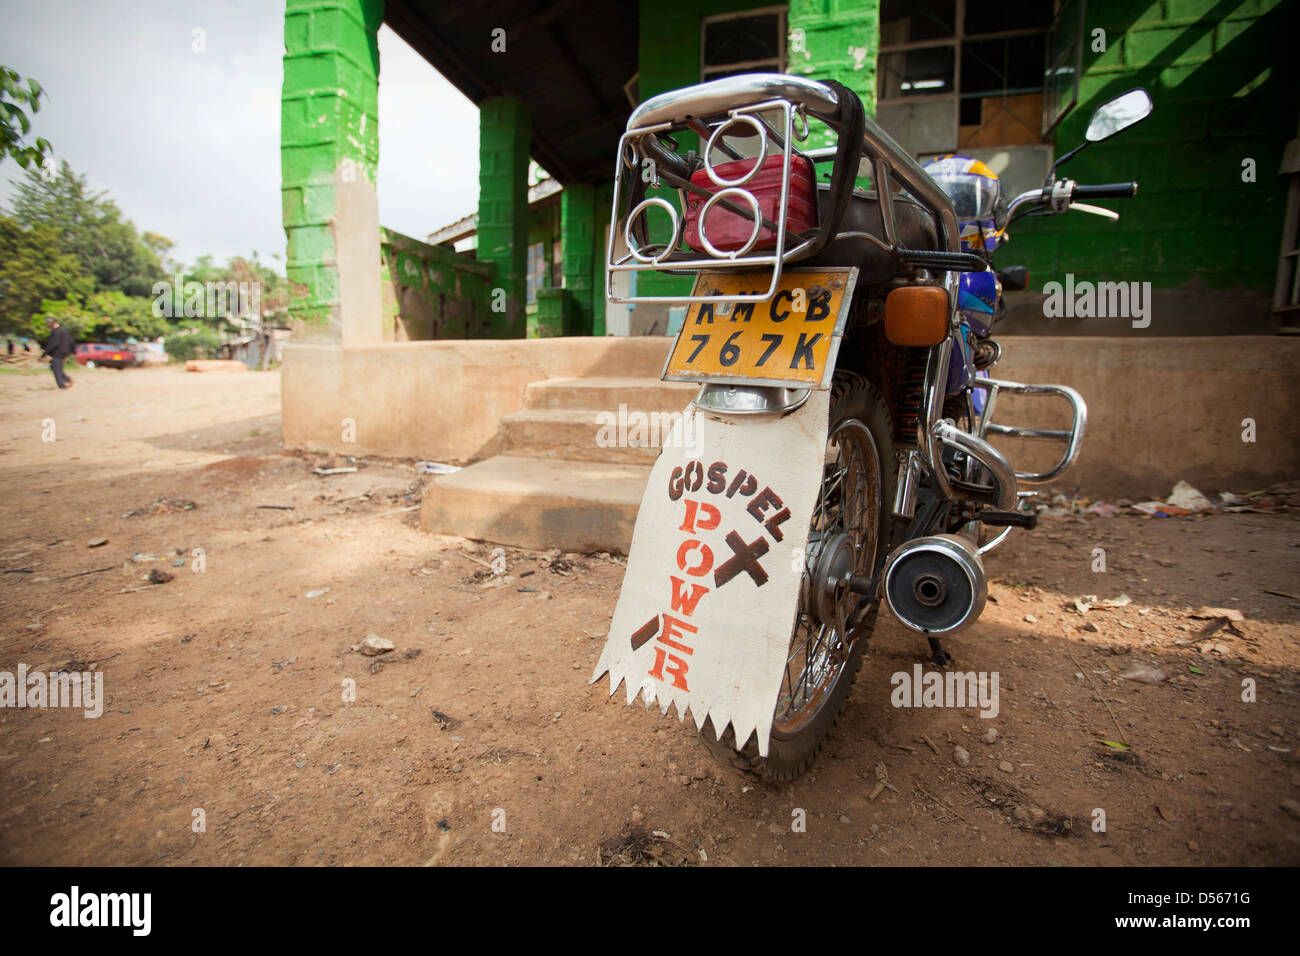 Guardia di fango su una moto blasonate con 'Vangelo potere' Yala, in Kenya. Foto Stock